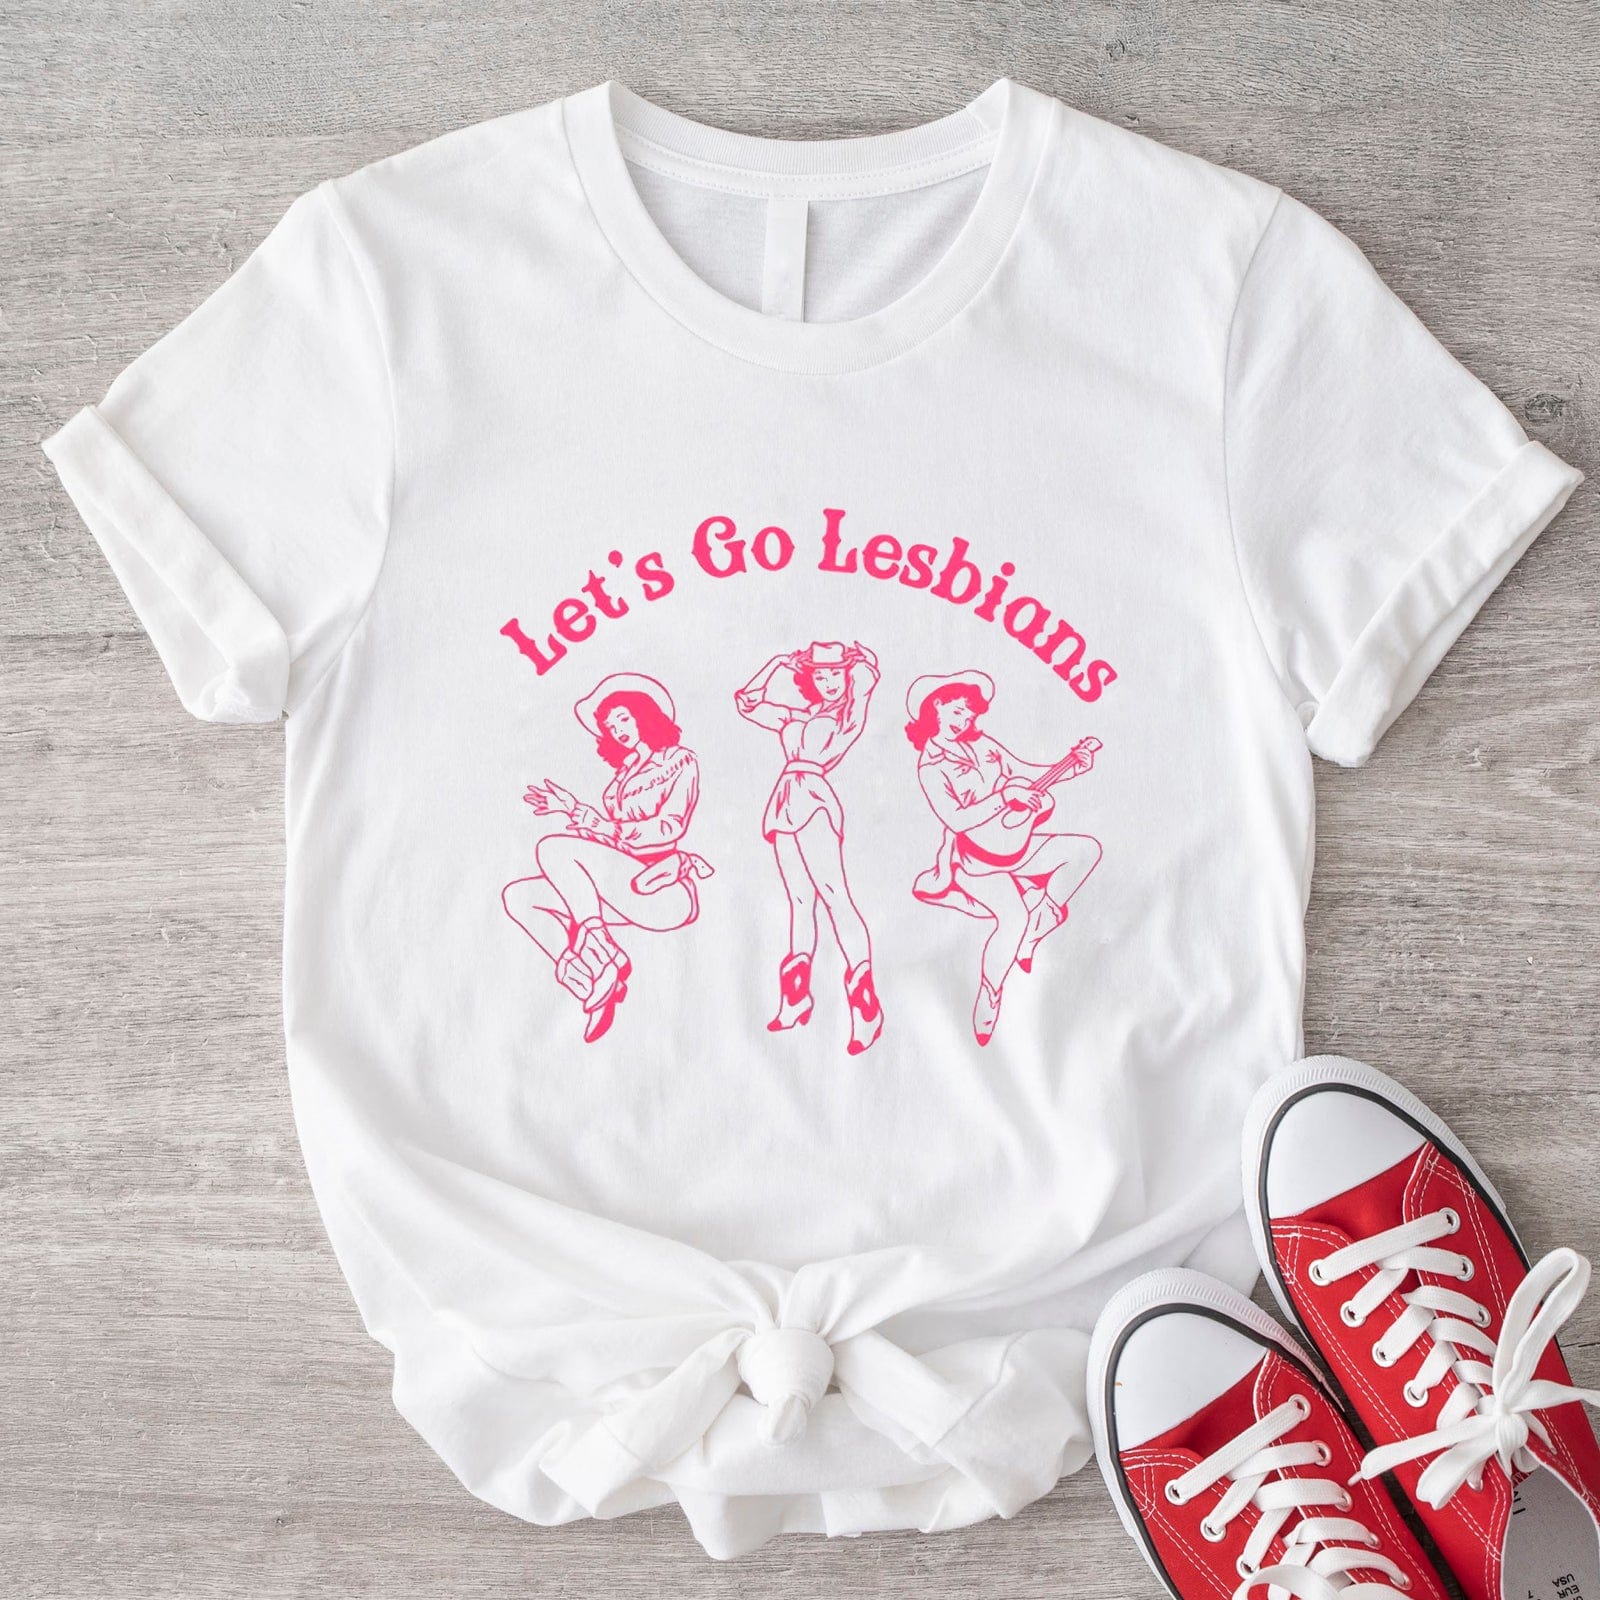 Let's Go Lesbians LGBT Shirts